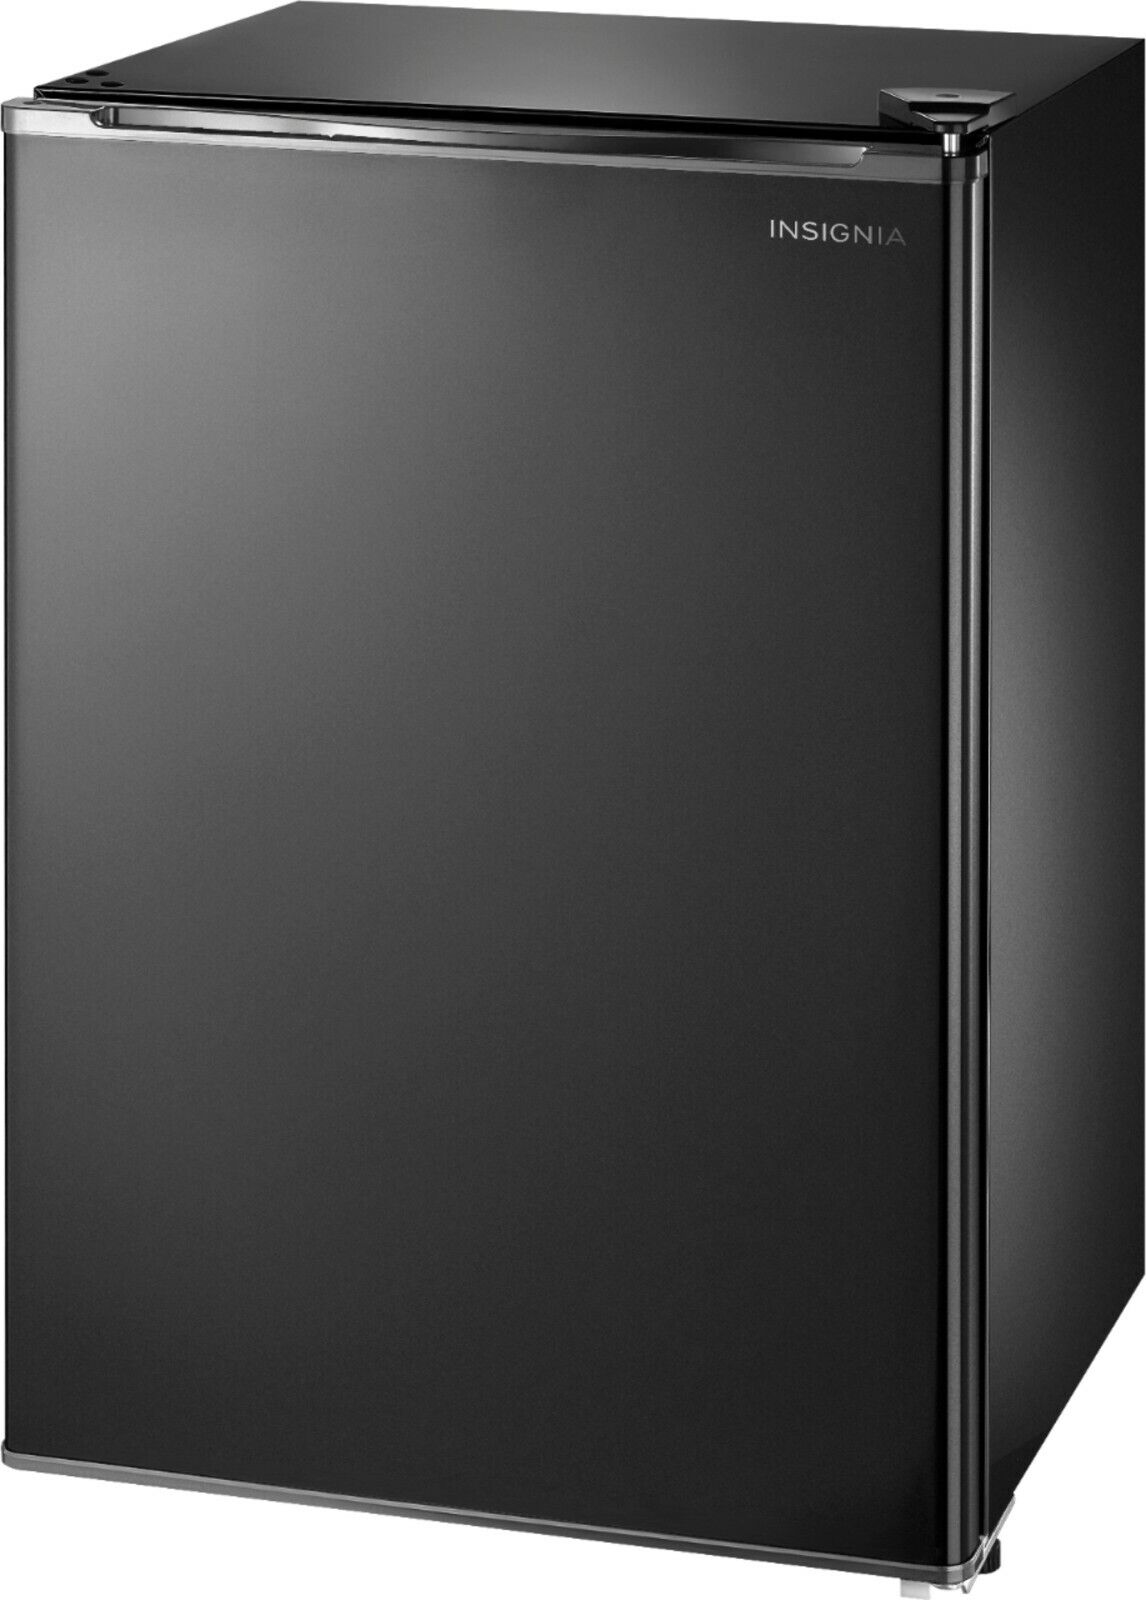 Refrigerators Collage Dorm Cooler Compact-black